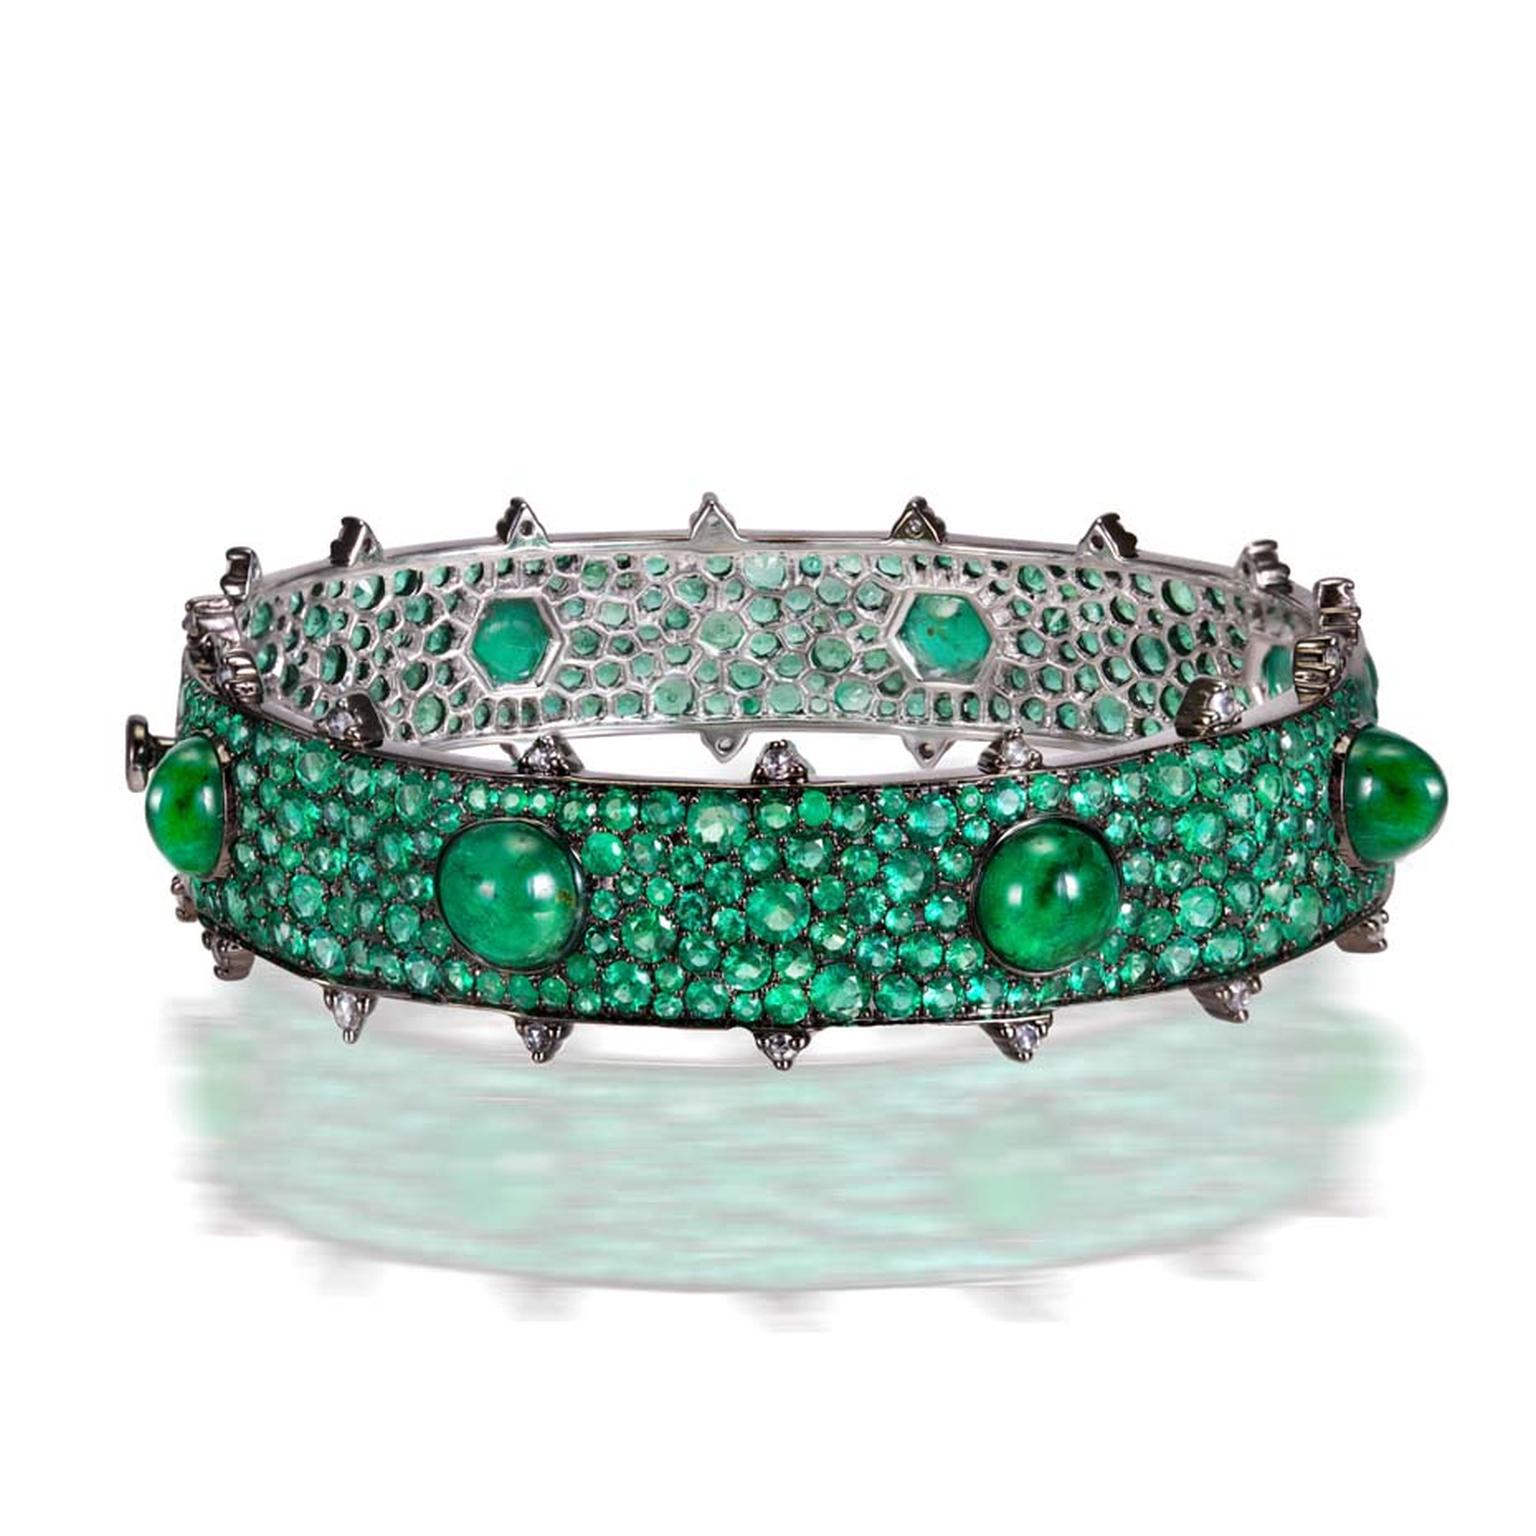 Nam Cho emerald bracelet featuring diamond-cut and cabochon Zambian emeralds and rose-cut diamonds (from $55,000).